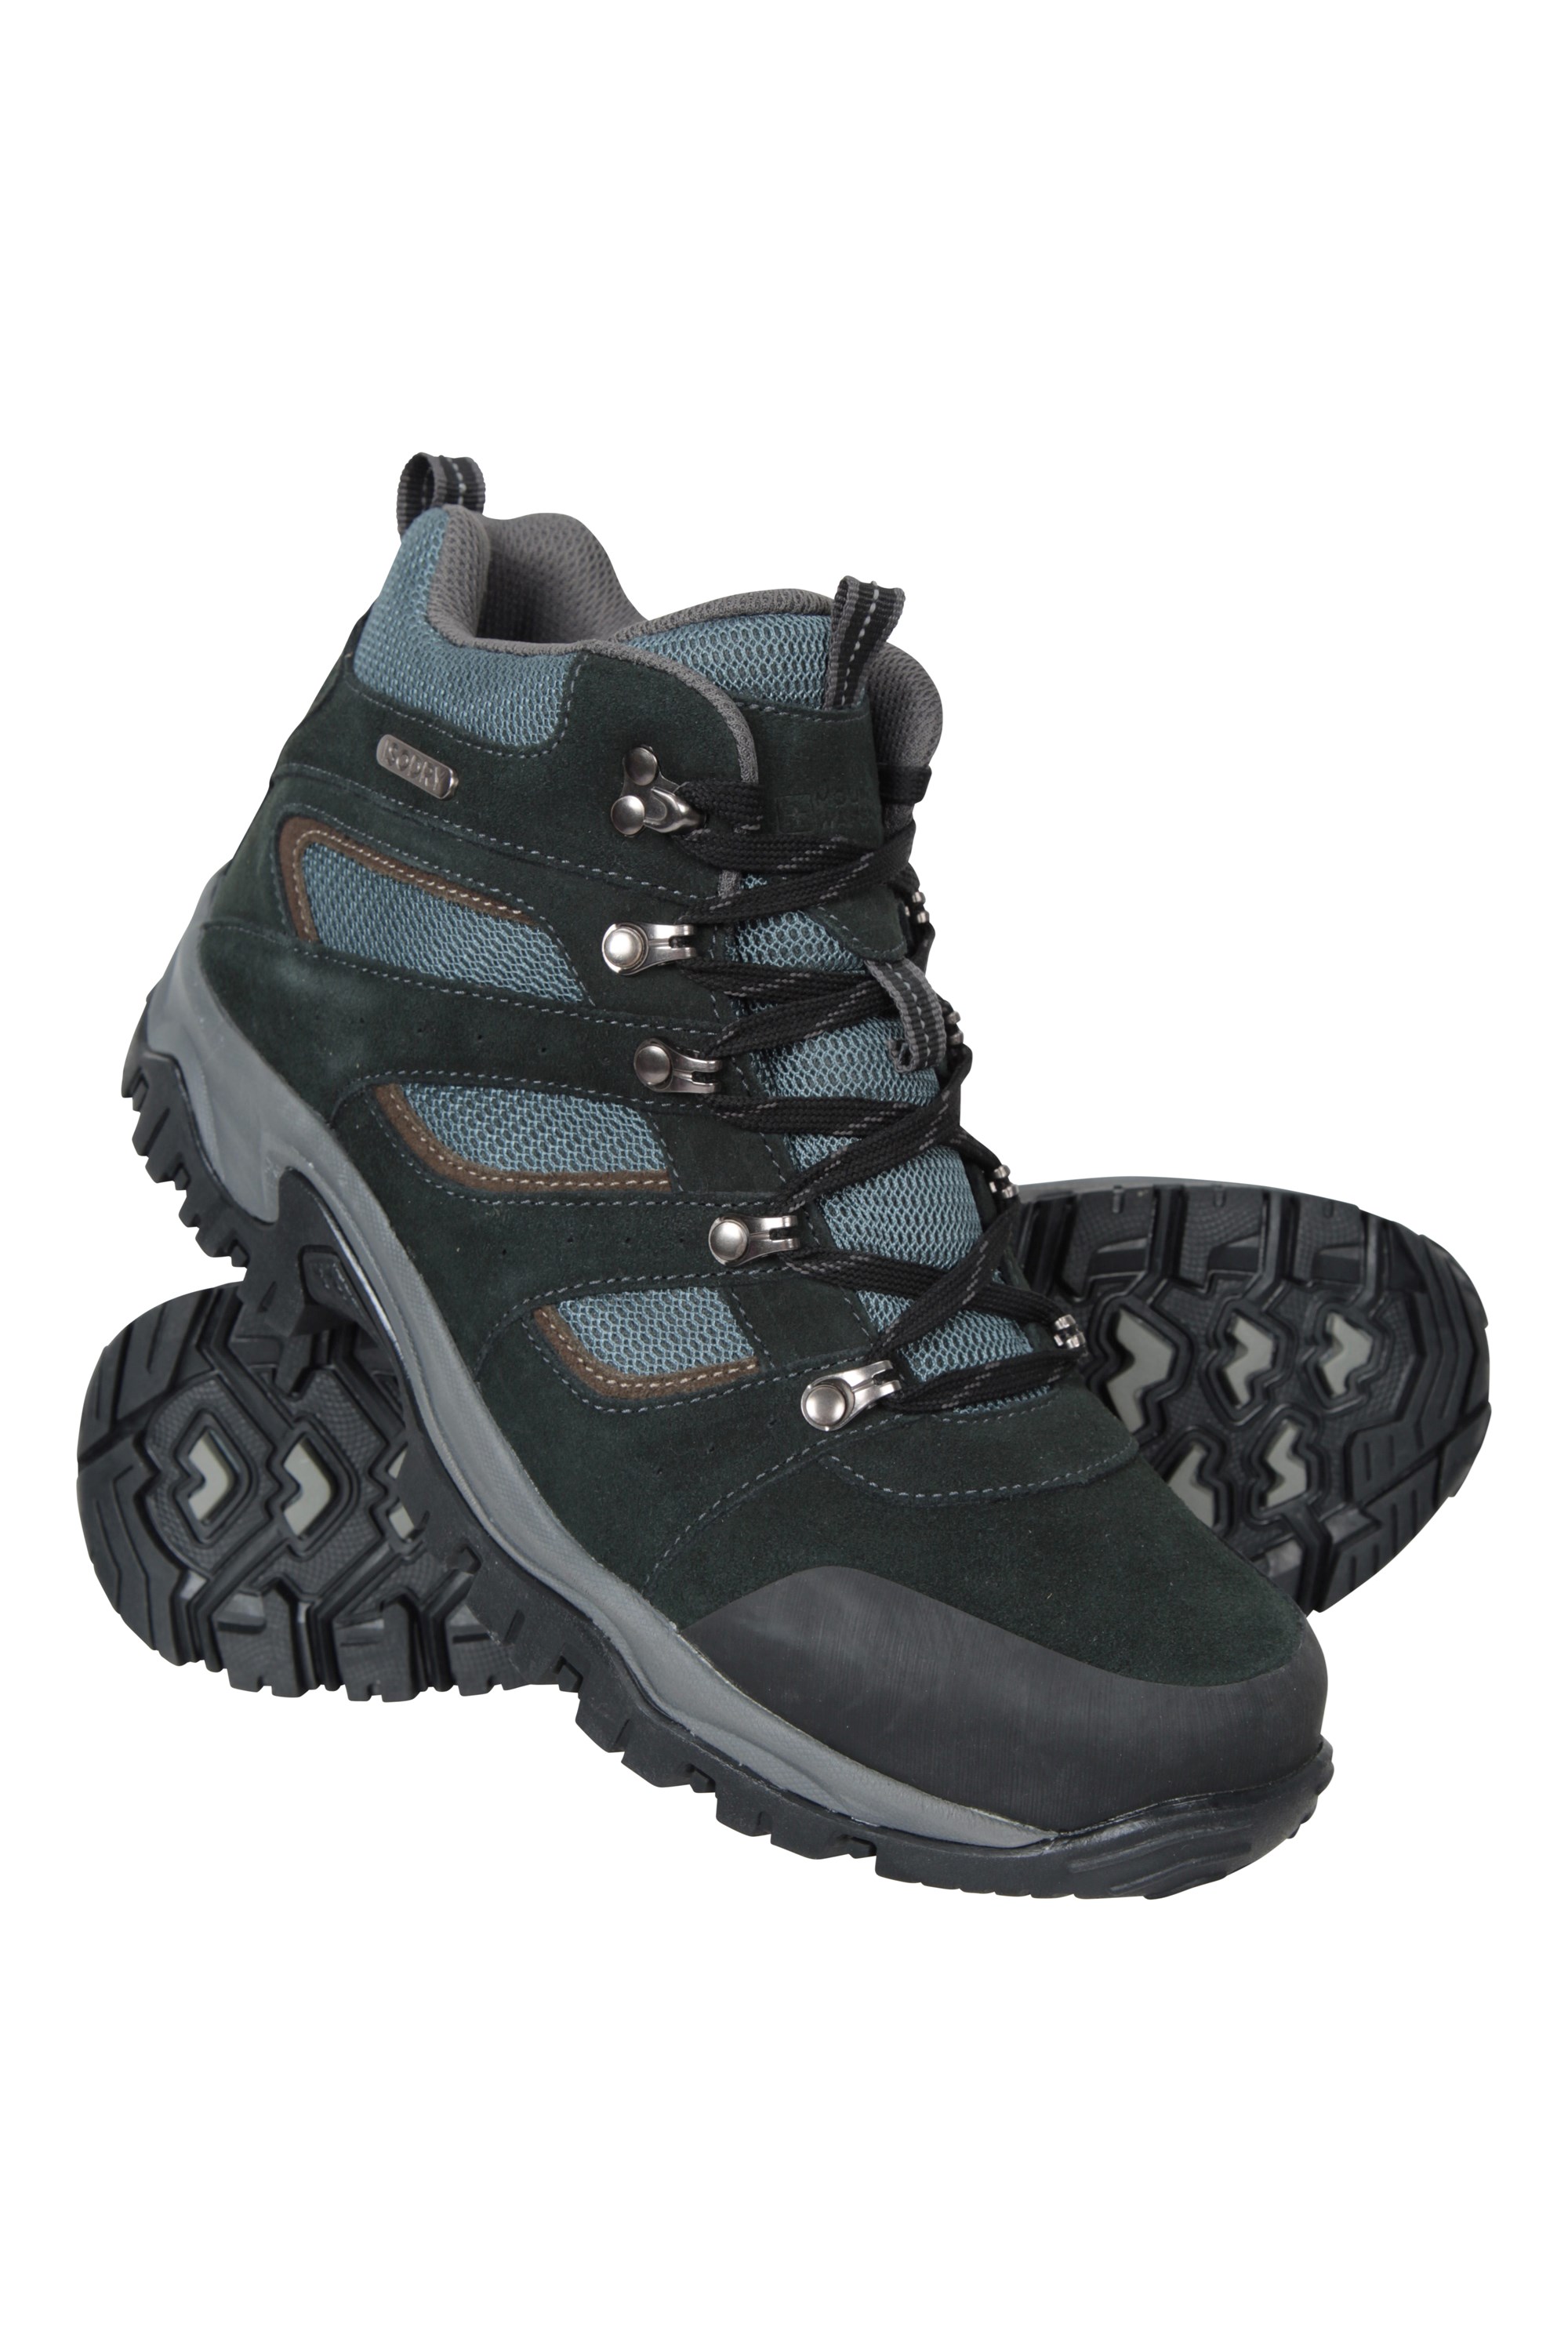 Casual Walking Boots Mountain Warehouse Camo Waterproof Kids Boots 